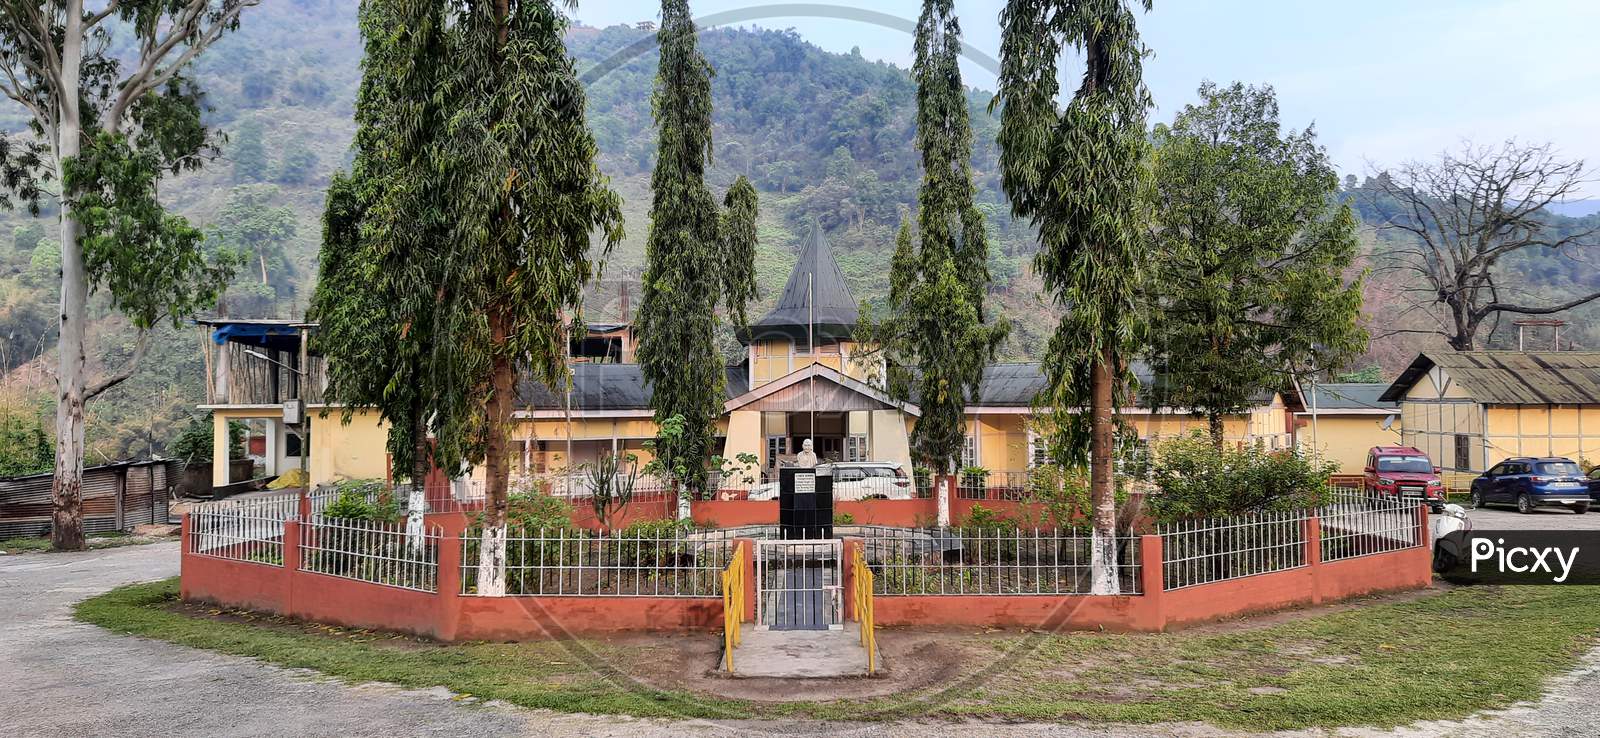 Circuit House, Seppa, East Kameng District, Arunachal Pradesh